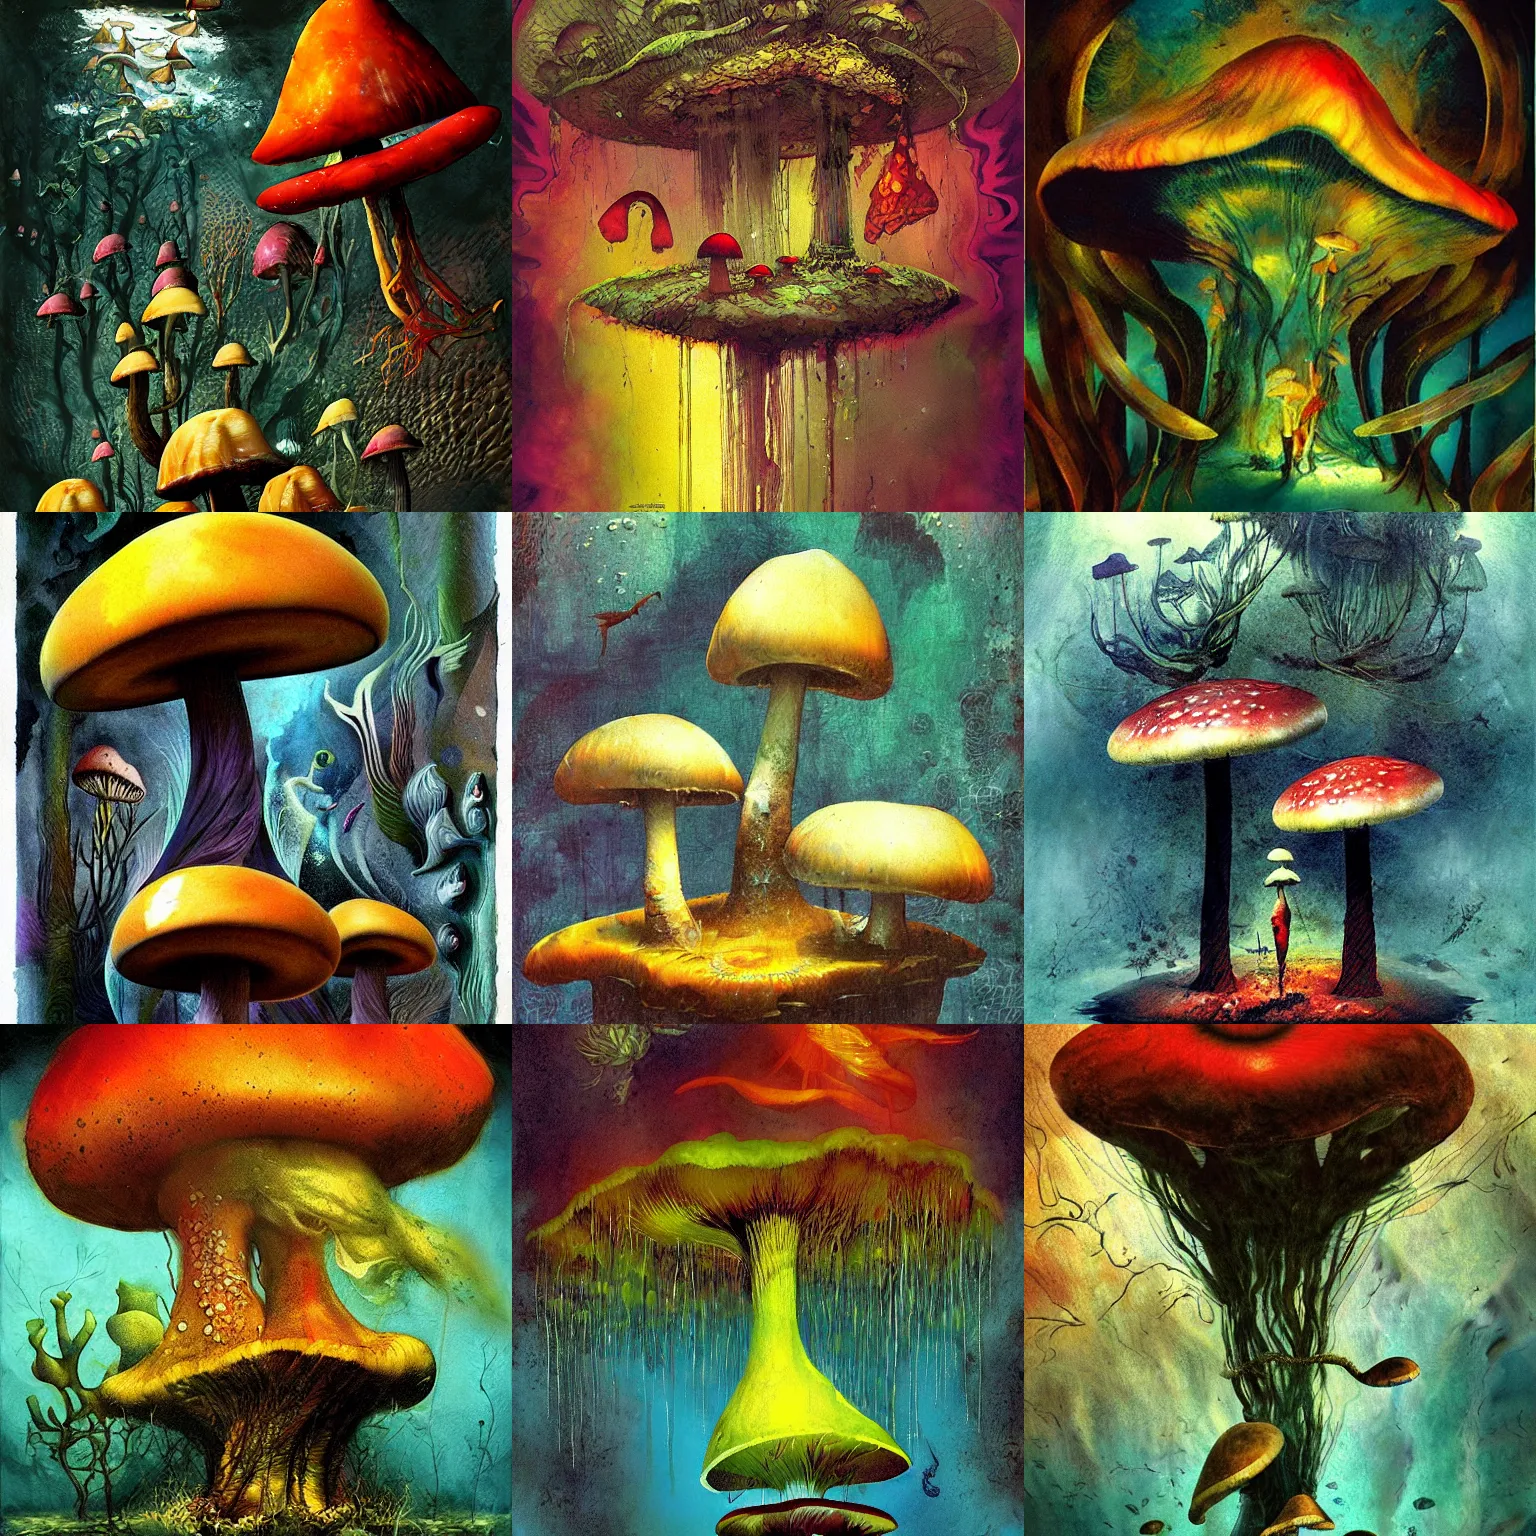 Prompt: a deep underwater, psychedelic mushrooms dream, by dave mckean, artstation